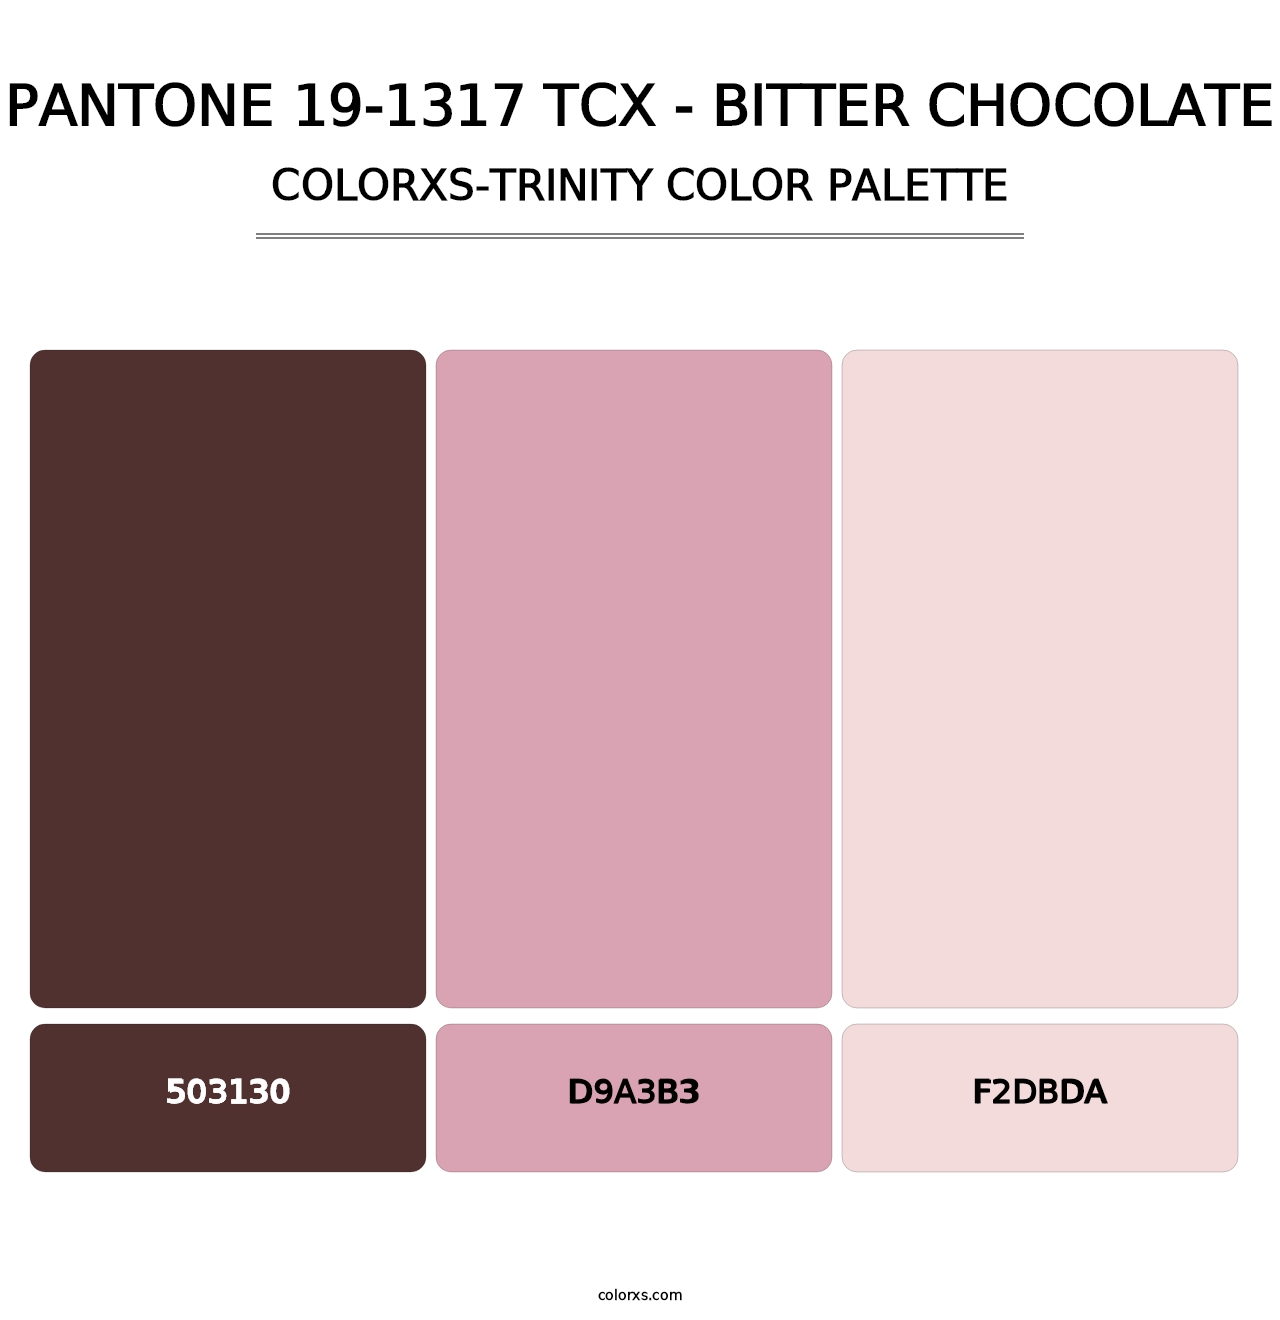 PANTONE 19-1317 TCX - Bitter Chocolate - Colorxs Trinity Palette